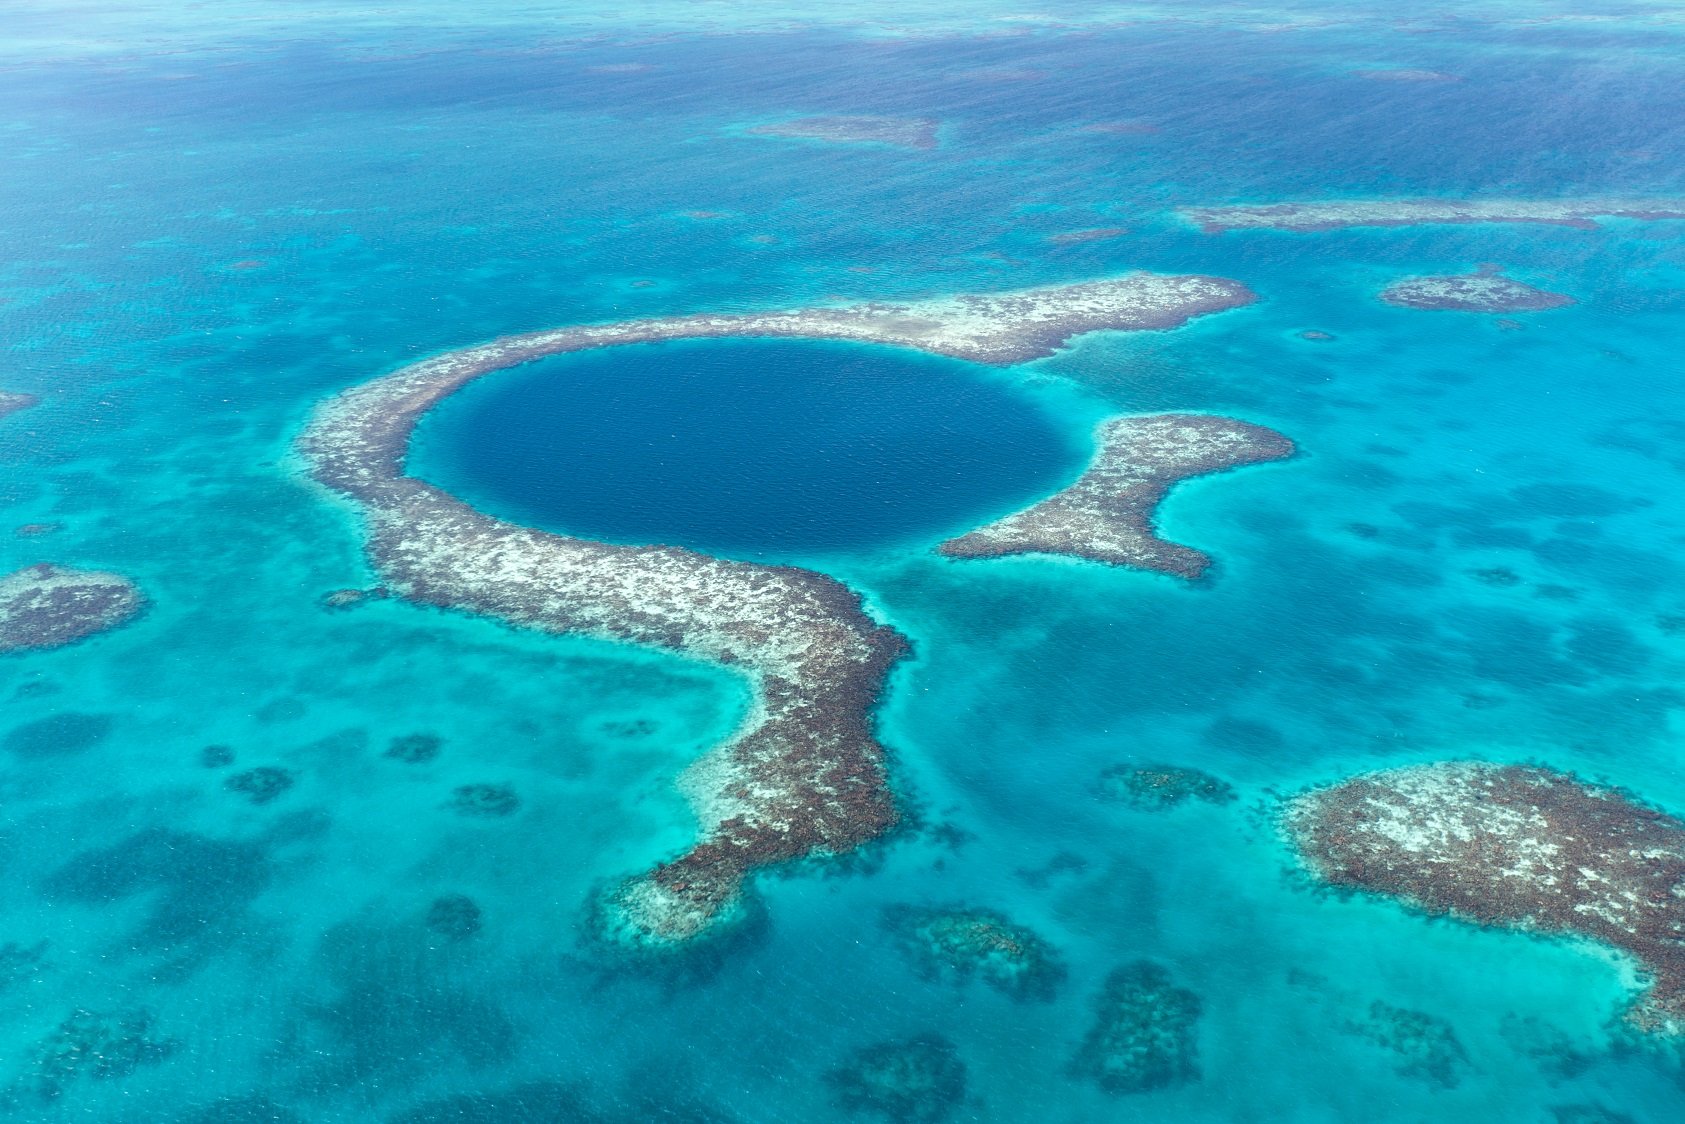 Belize's Great Blue Hole: Exploring The Largest Sinkhole